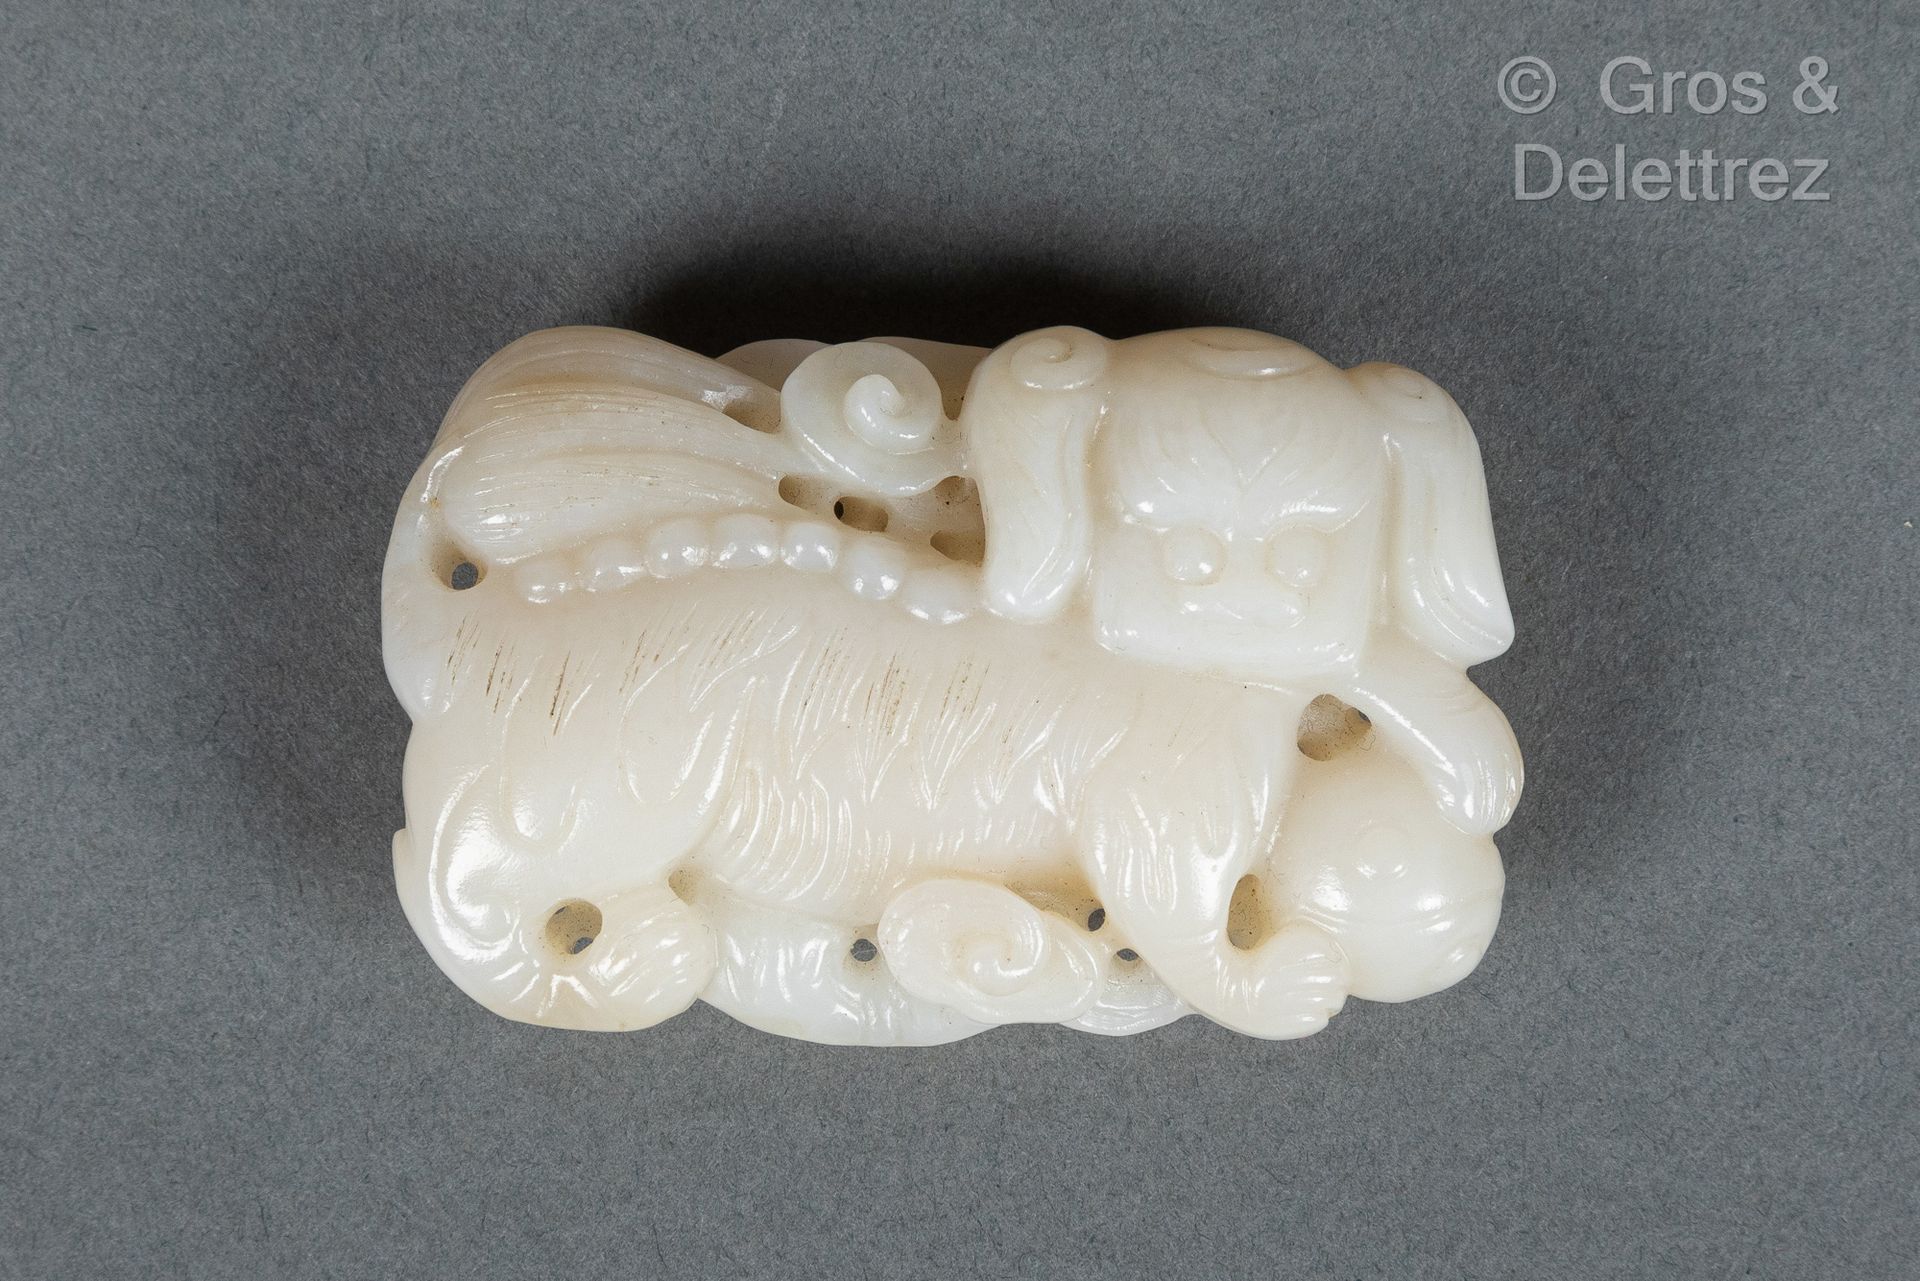 Null China, circa 1900
White jade belt buckle, representing a fô dog. 
L. 7.4 cm